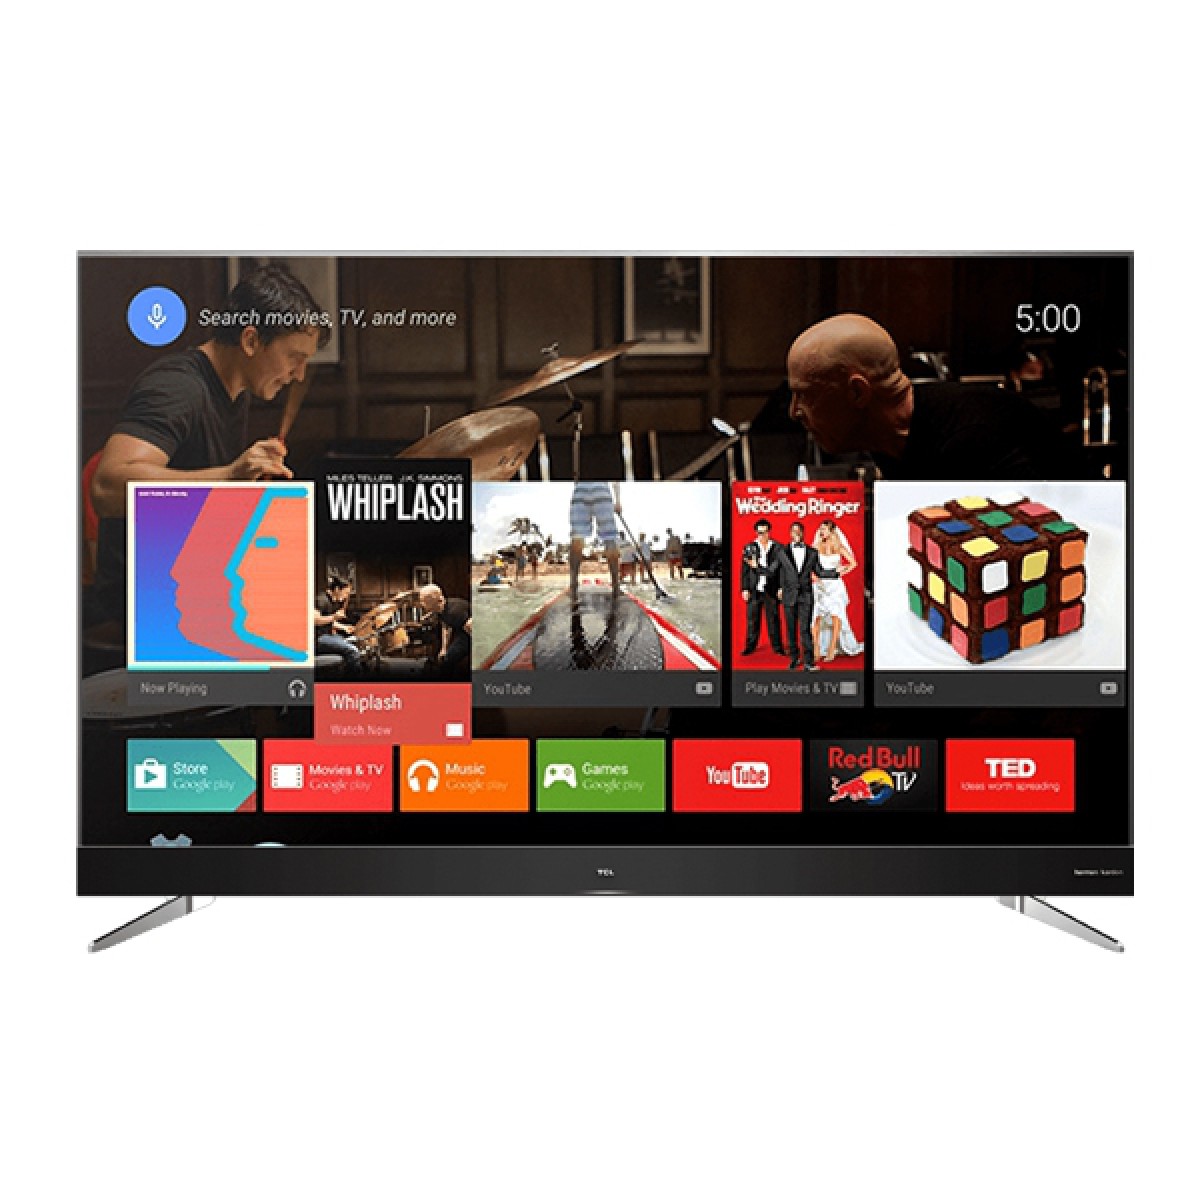 TCL Android TV 75. Телевизор ТСЛ 75 диагональ. Tlc телевизор купить